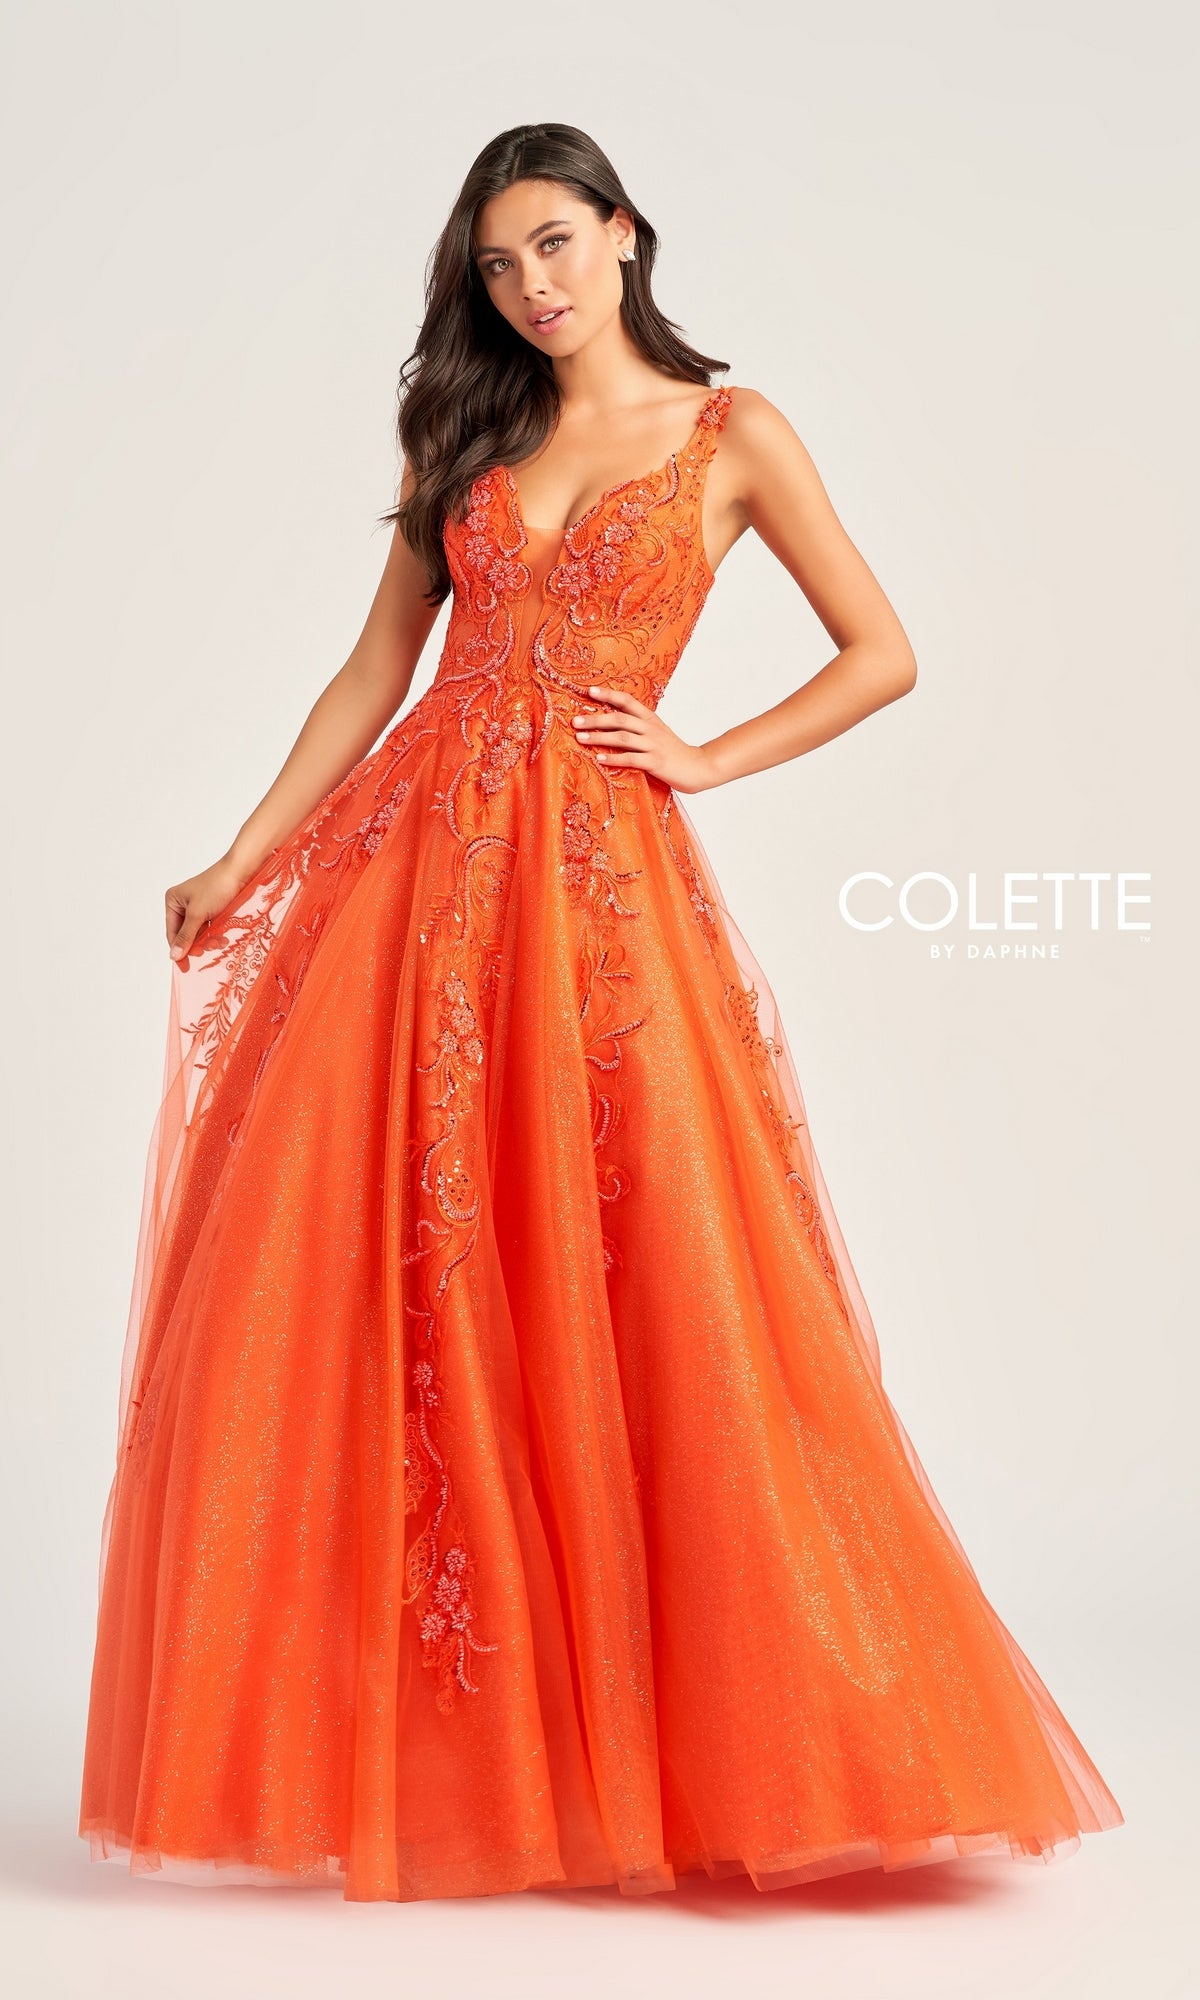 Colette Glitter Long Designer Prom Ball Gown CL5261